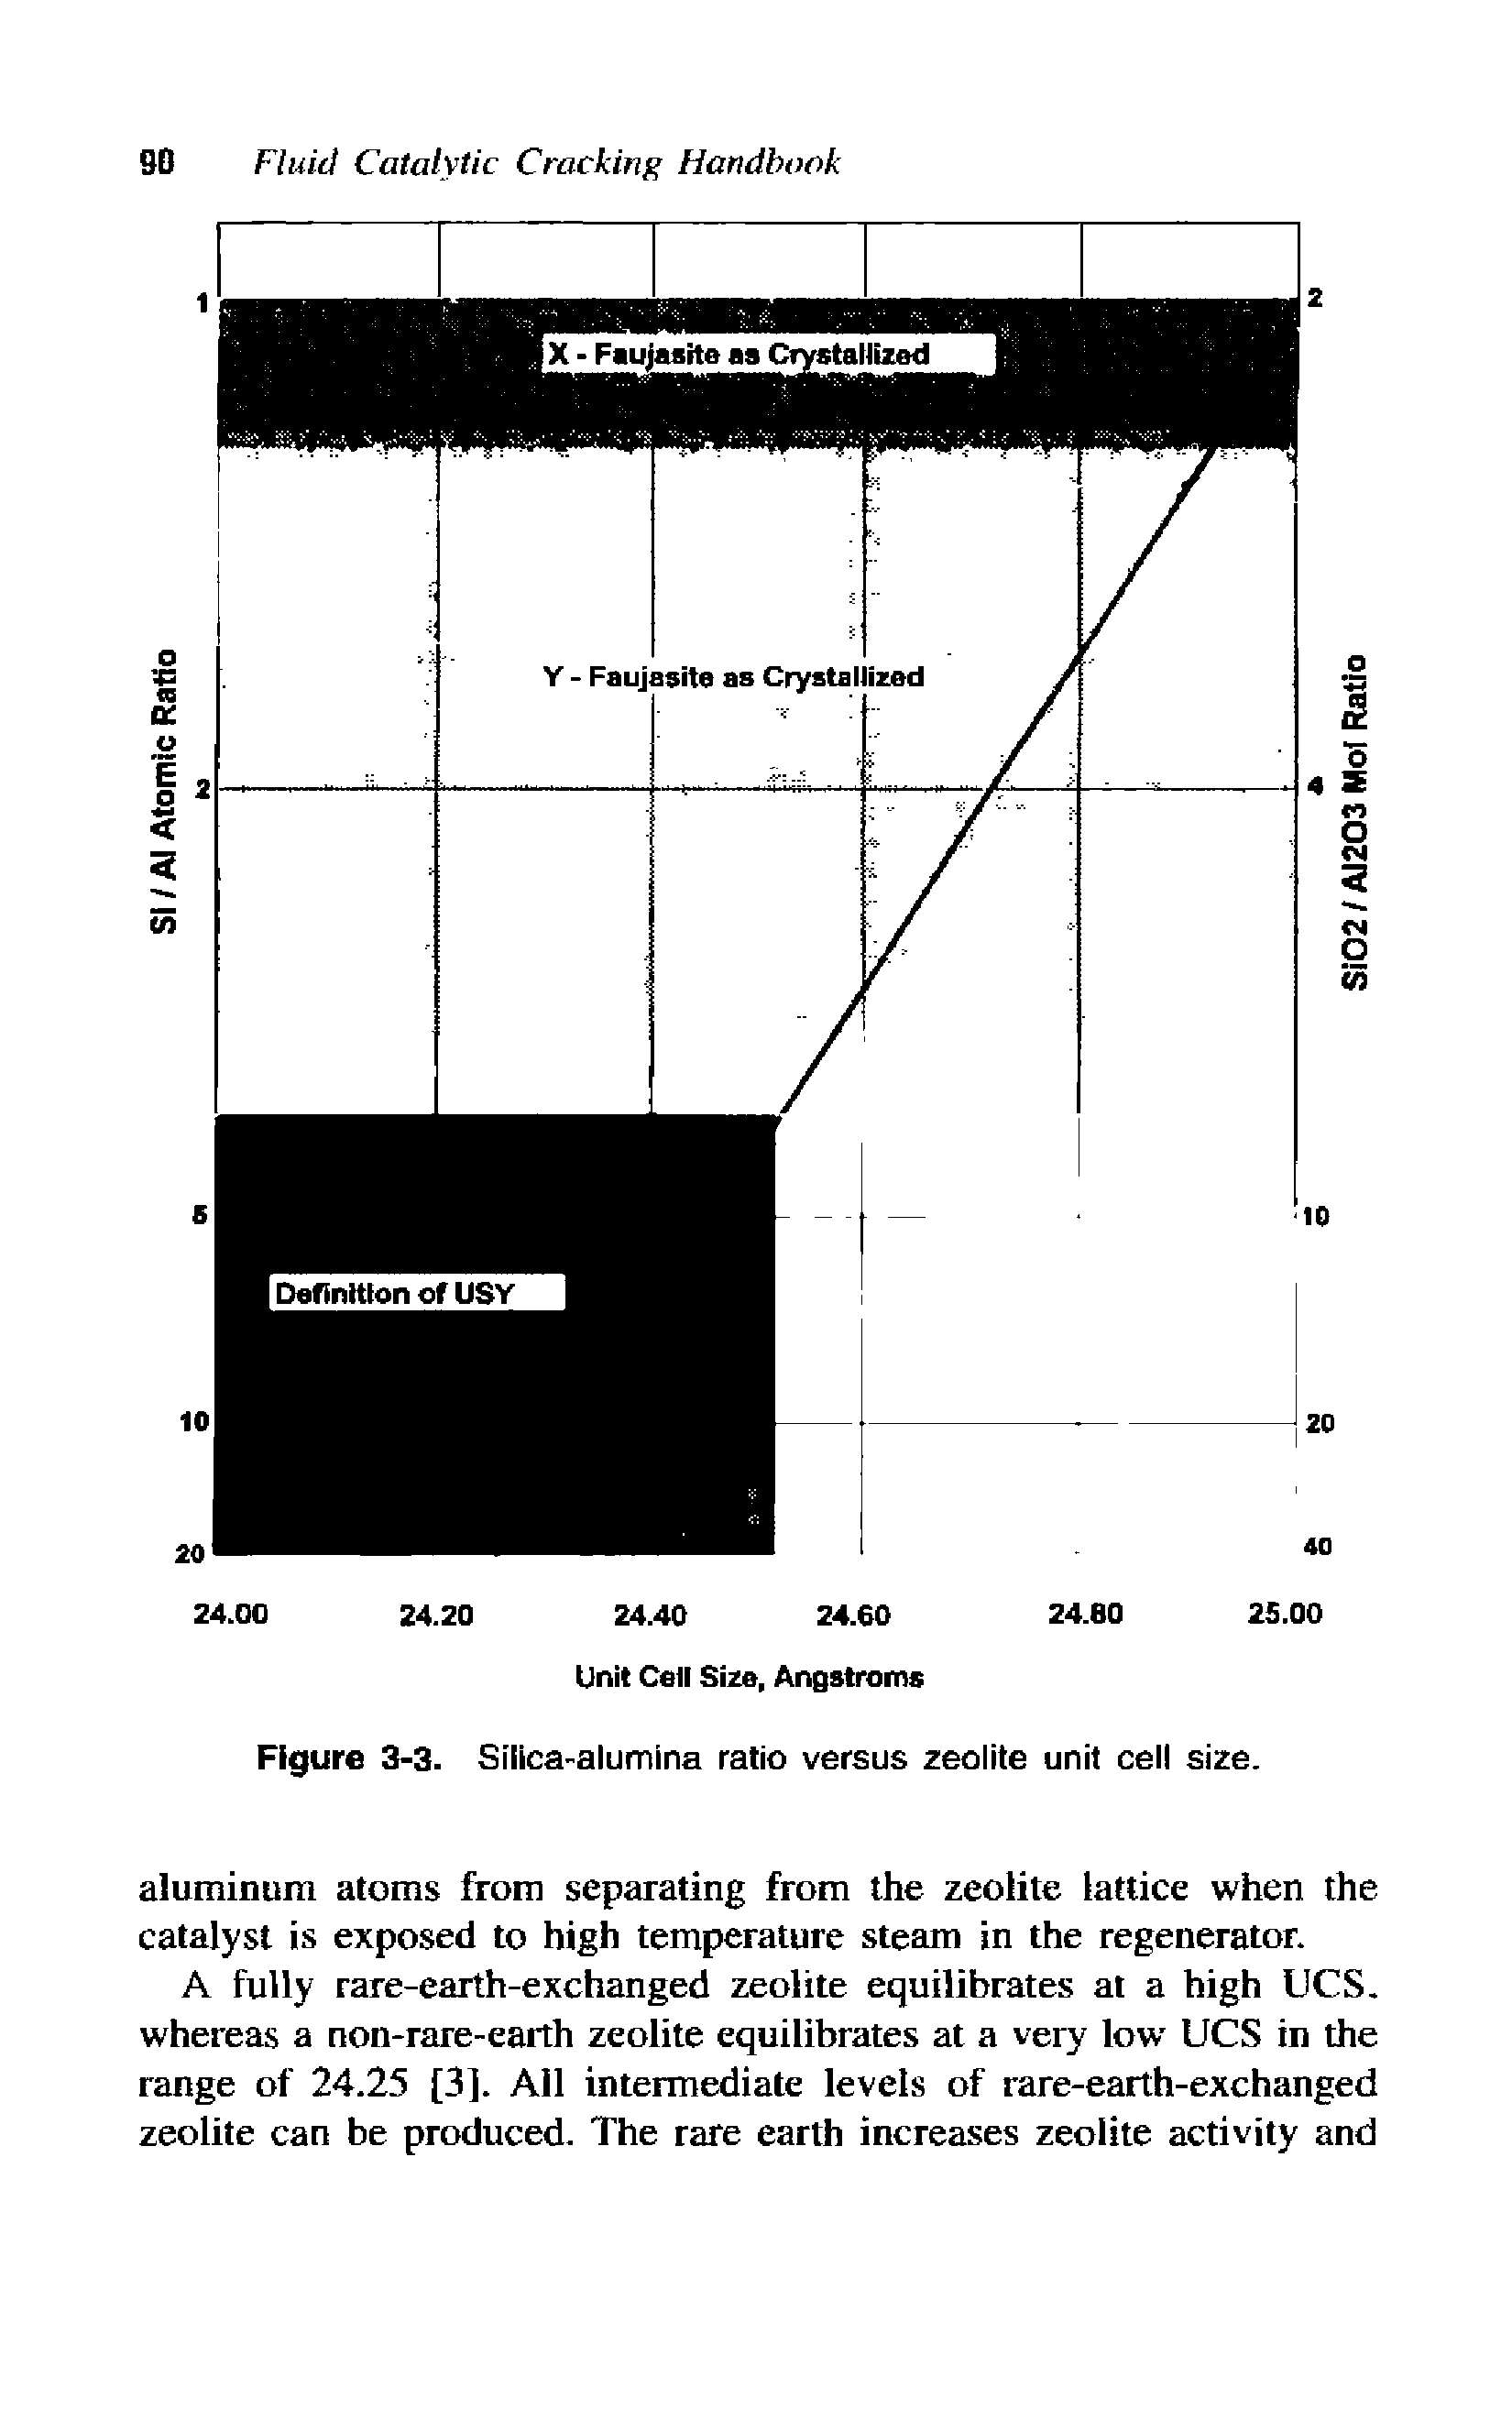 Figure 3-3. Silica-alumina ratio versus zeolite unit cell size.